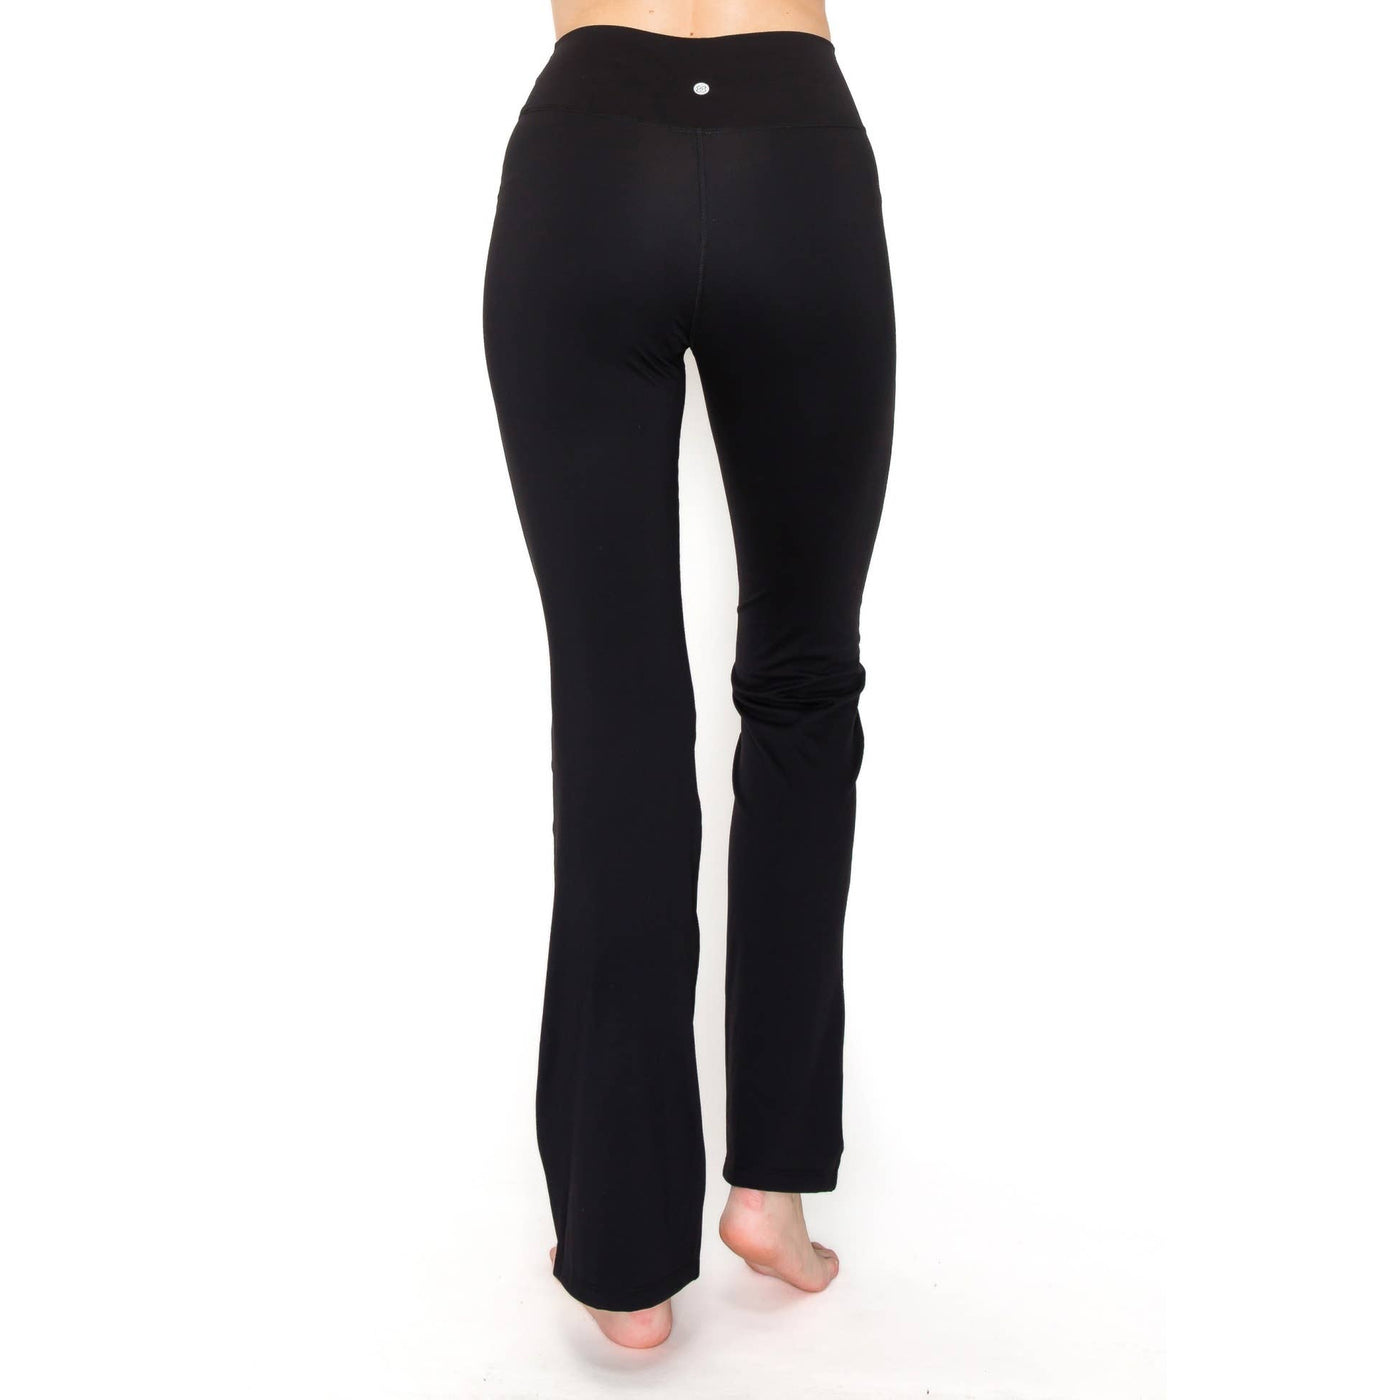 Basic Black V-Waist 31" In-Seam Flared Yoga Pants